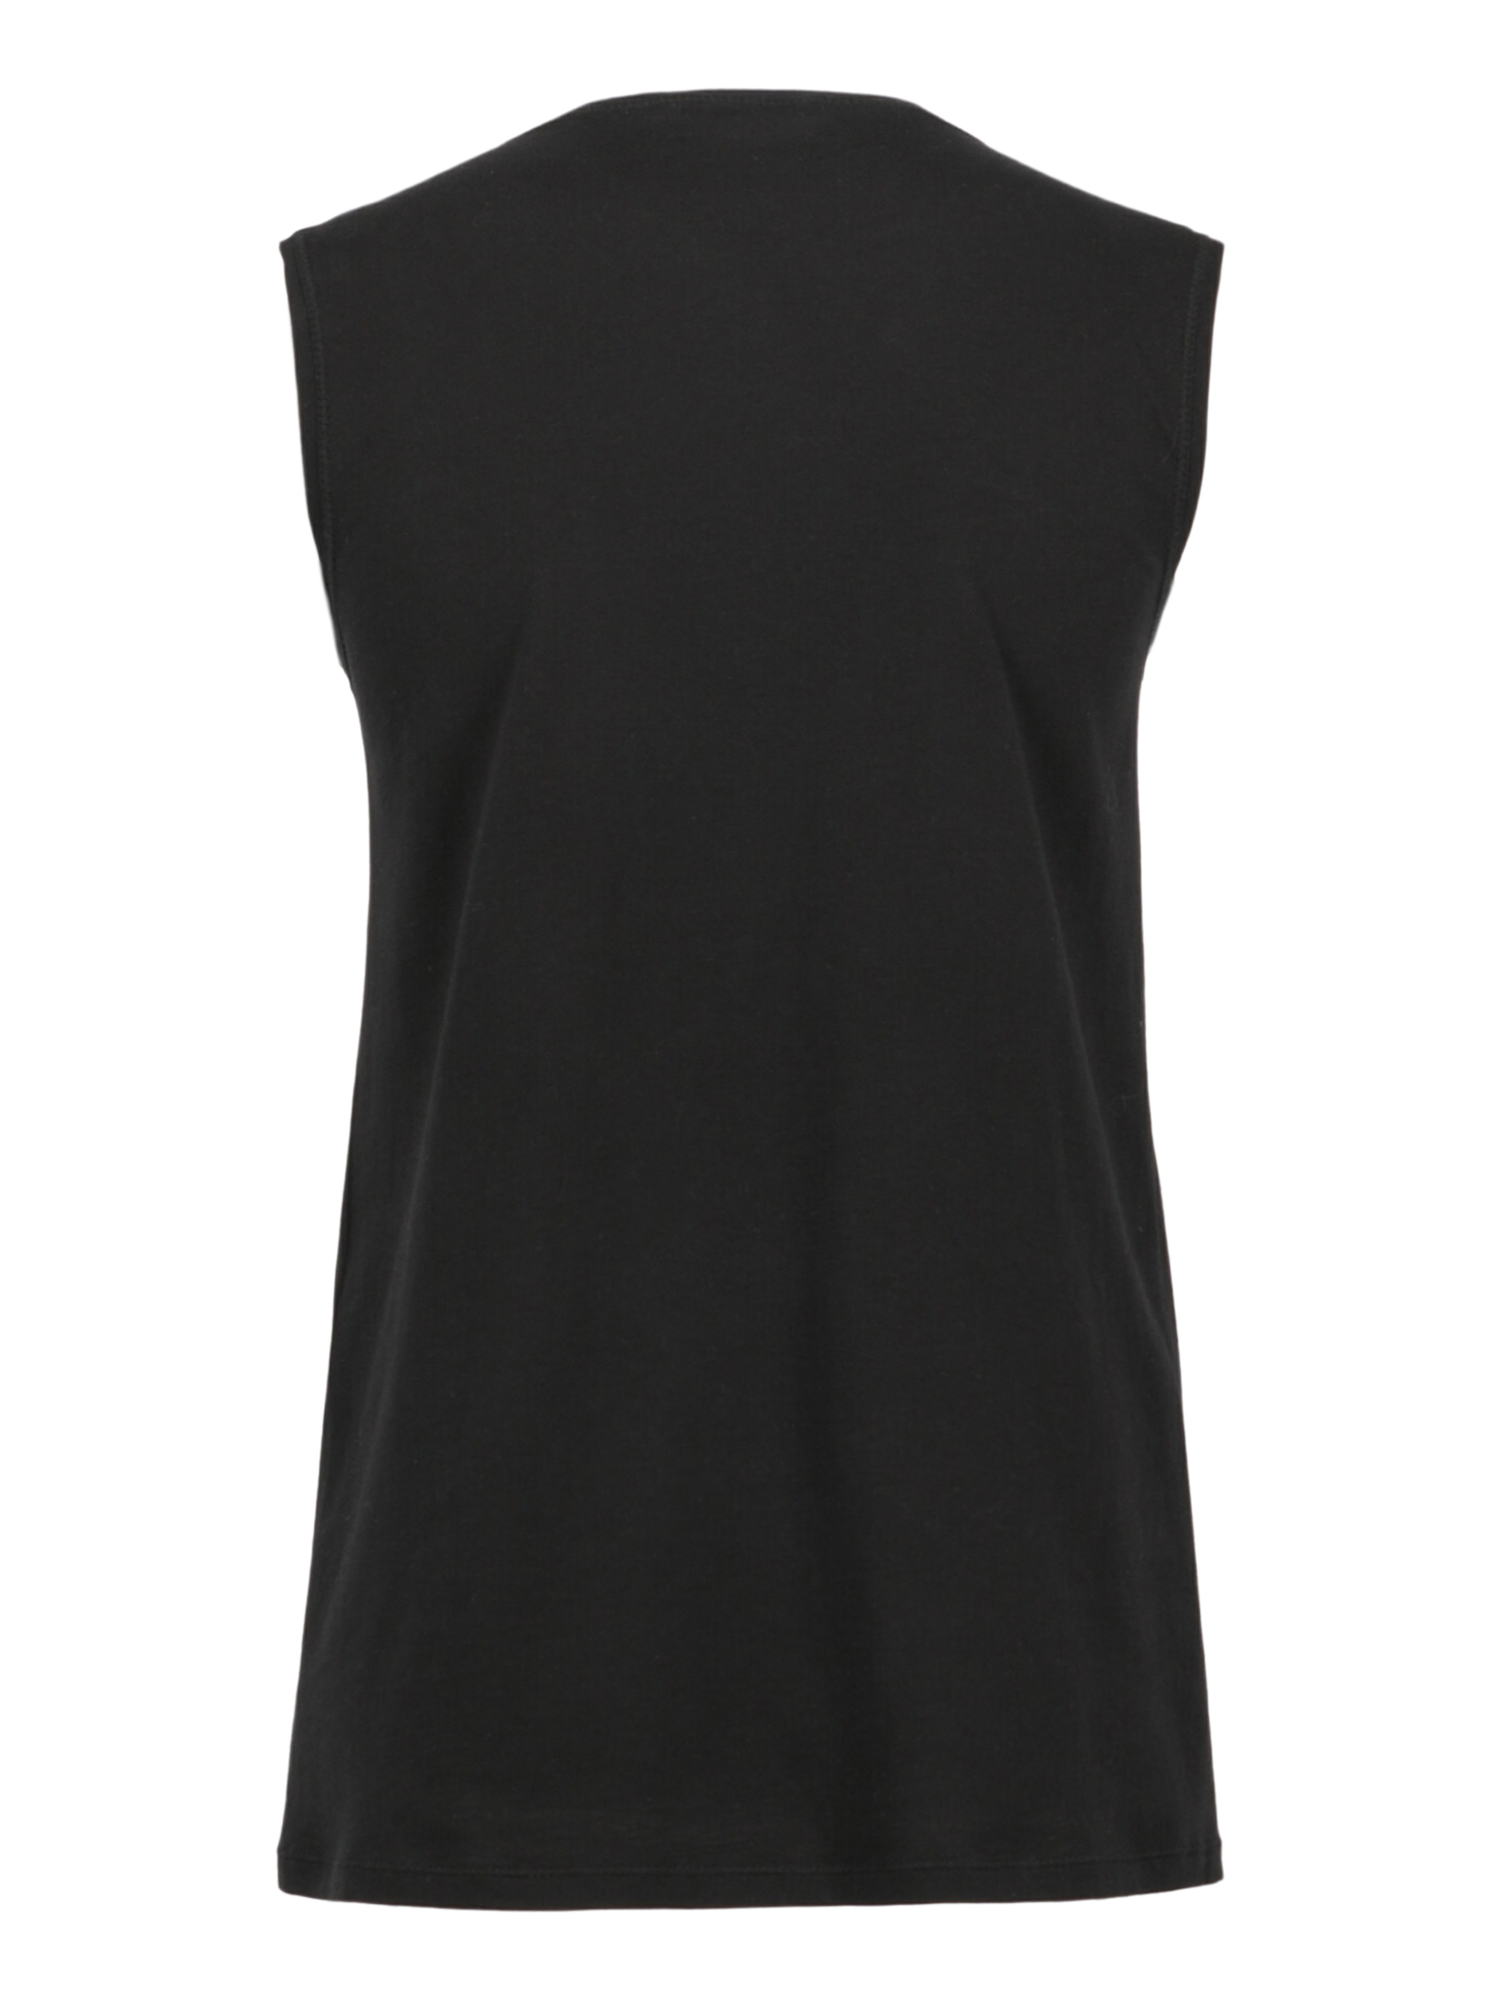 Bottega Veneta Special Price Women T-shirts and Top Black IT 38 | eBay